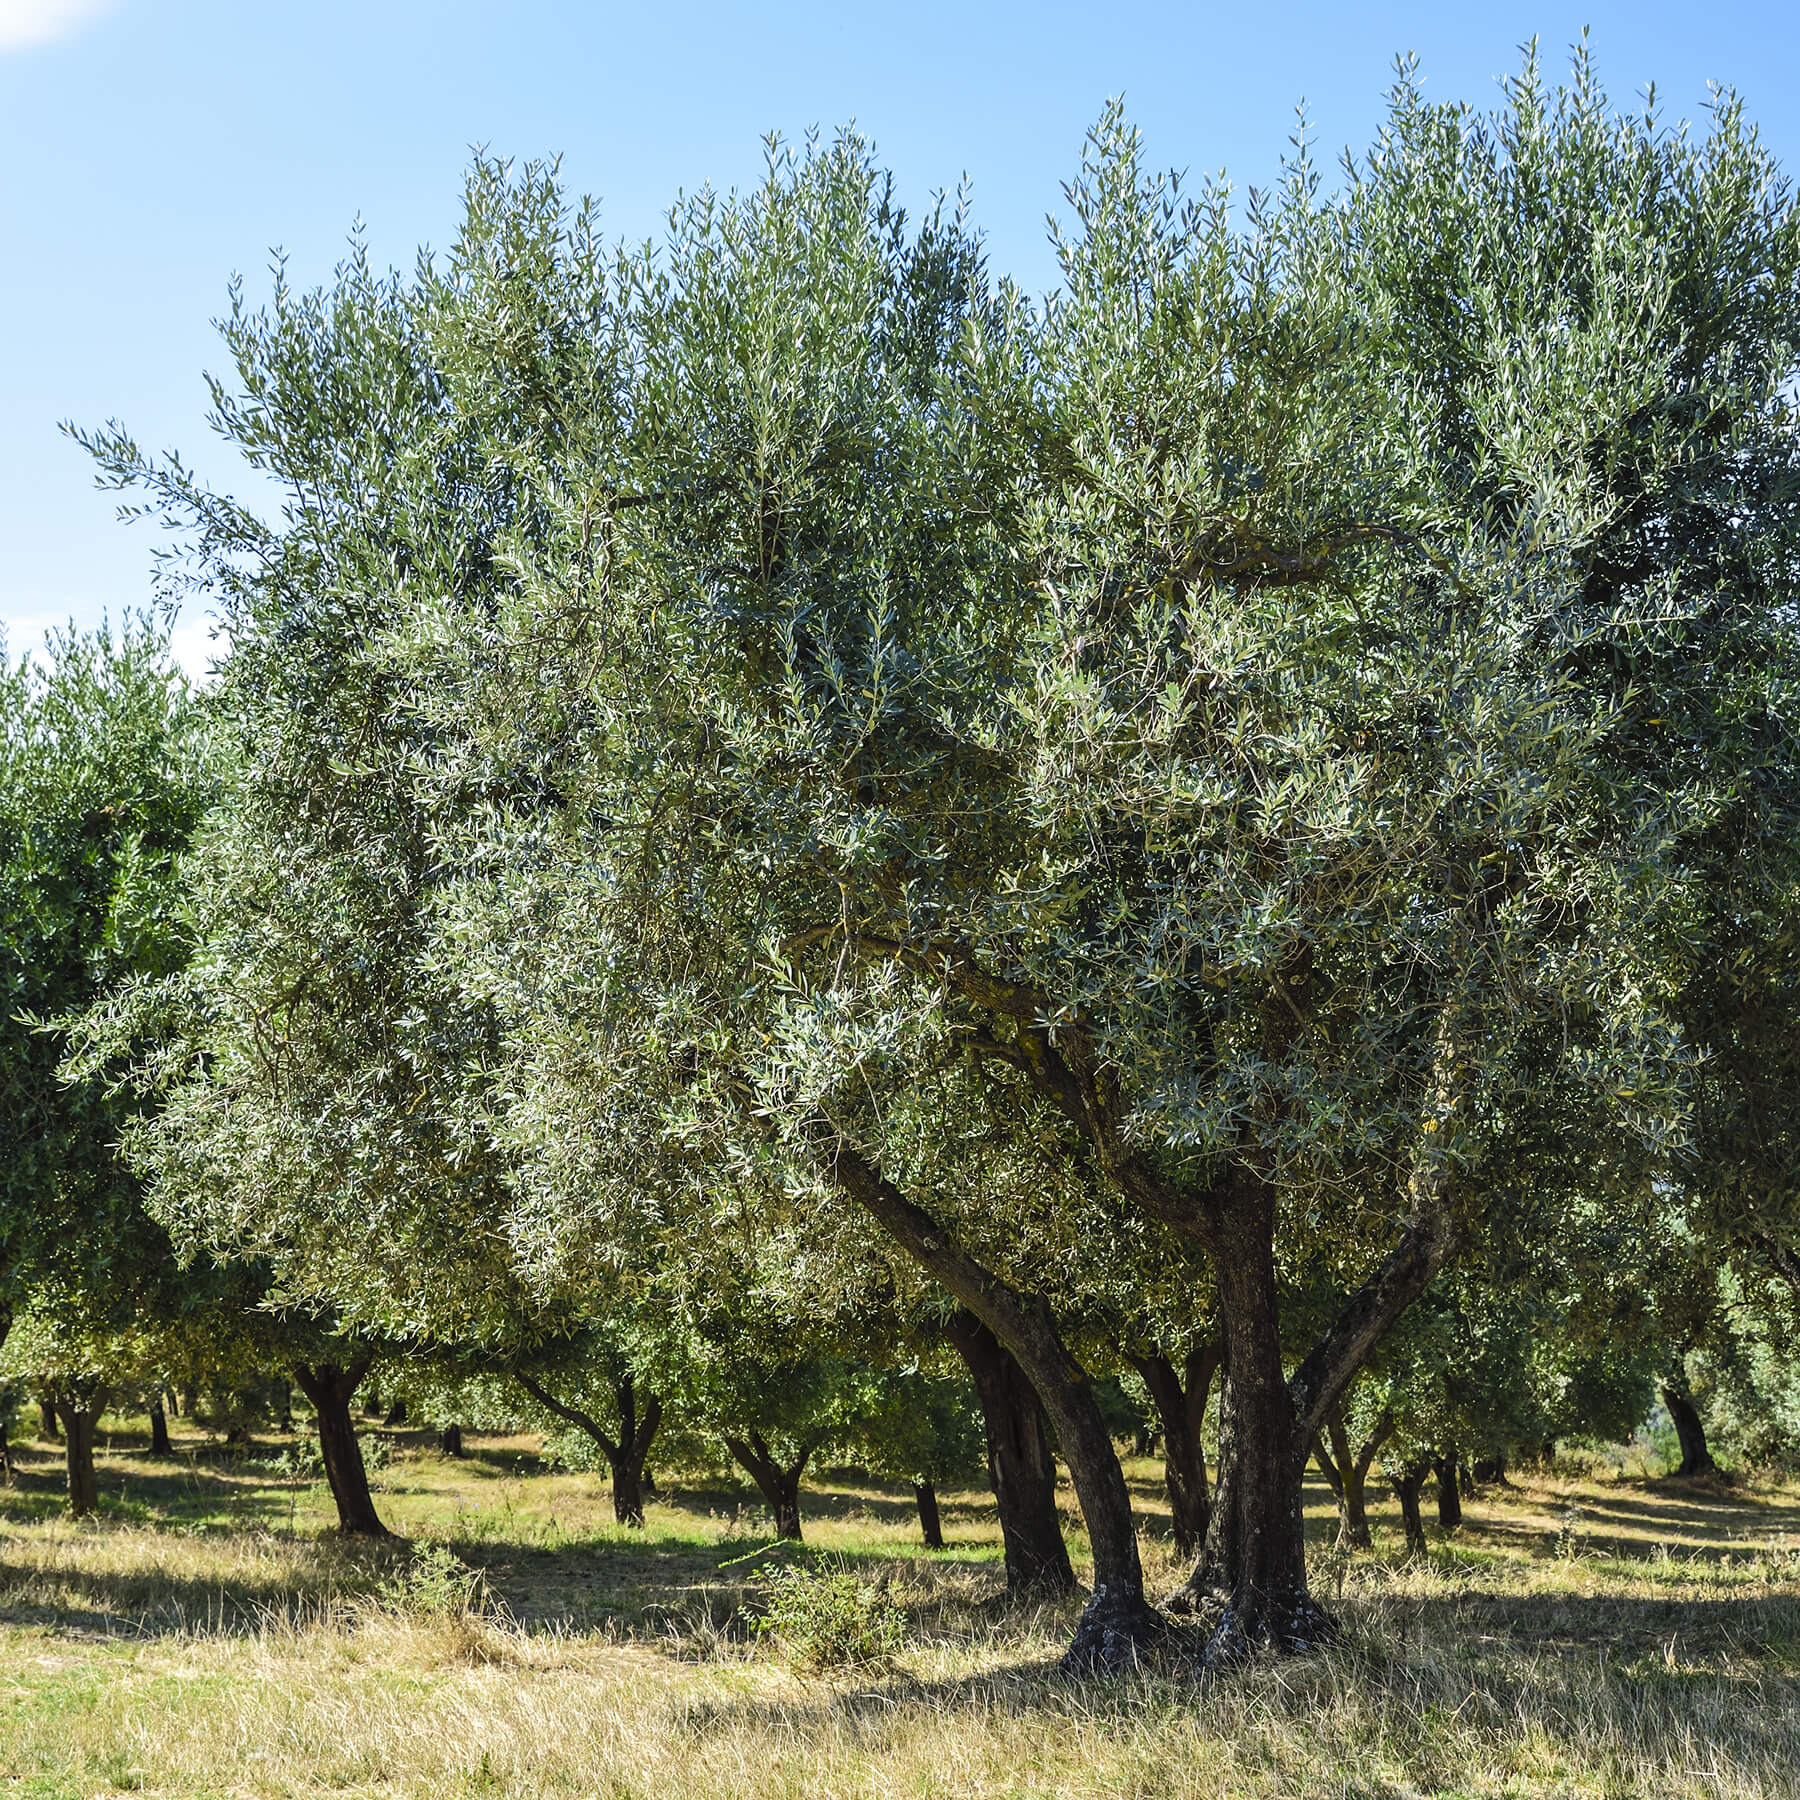 Cypressa Olive Oils & Vinegars